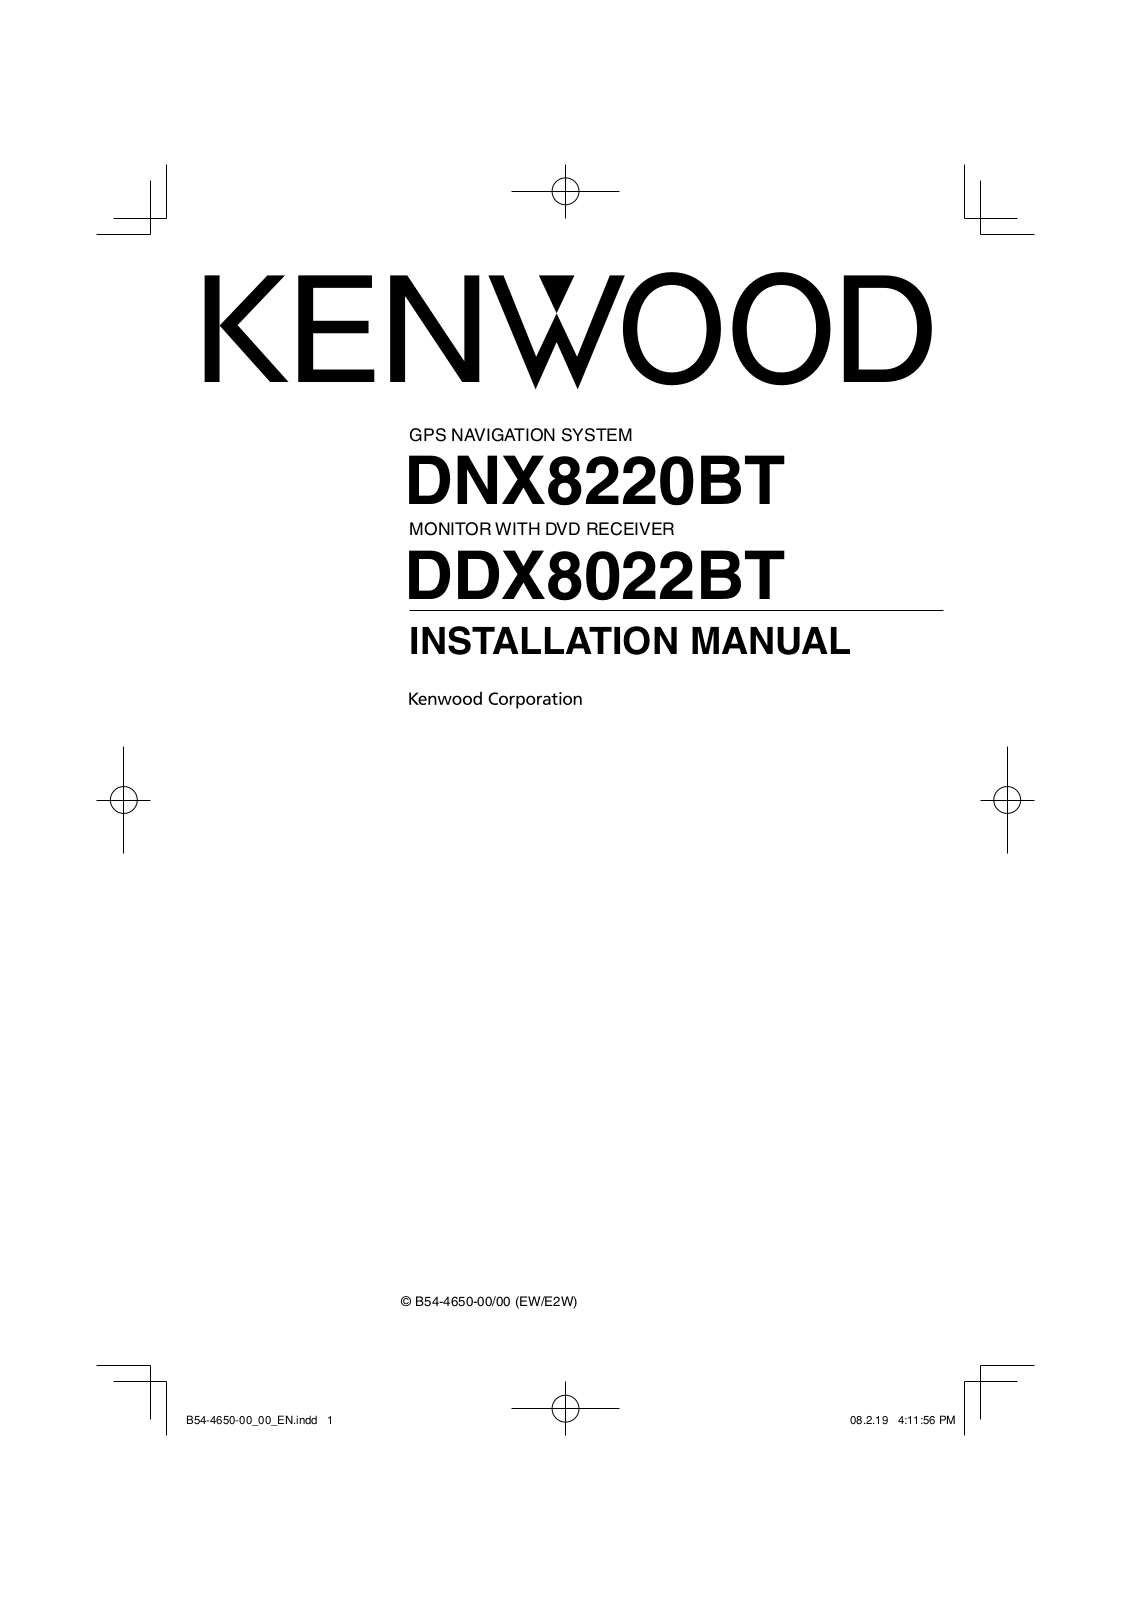 Kenwood DNX8220BT, DDX8022BT User Manual